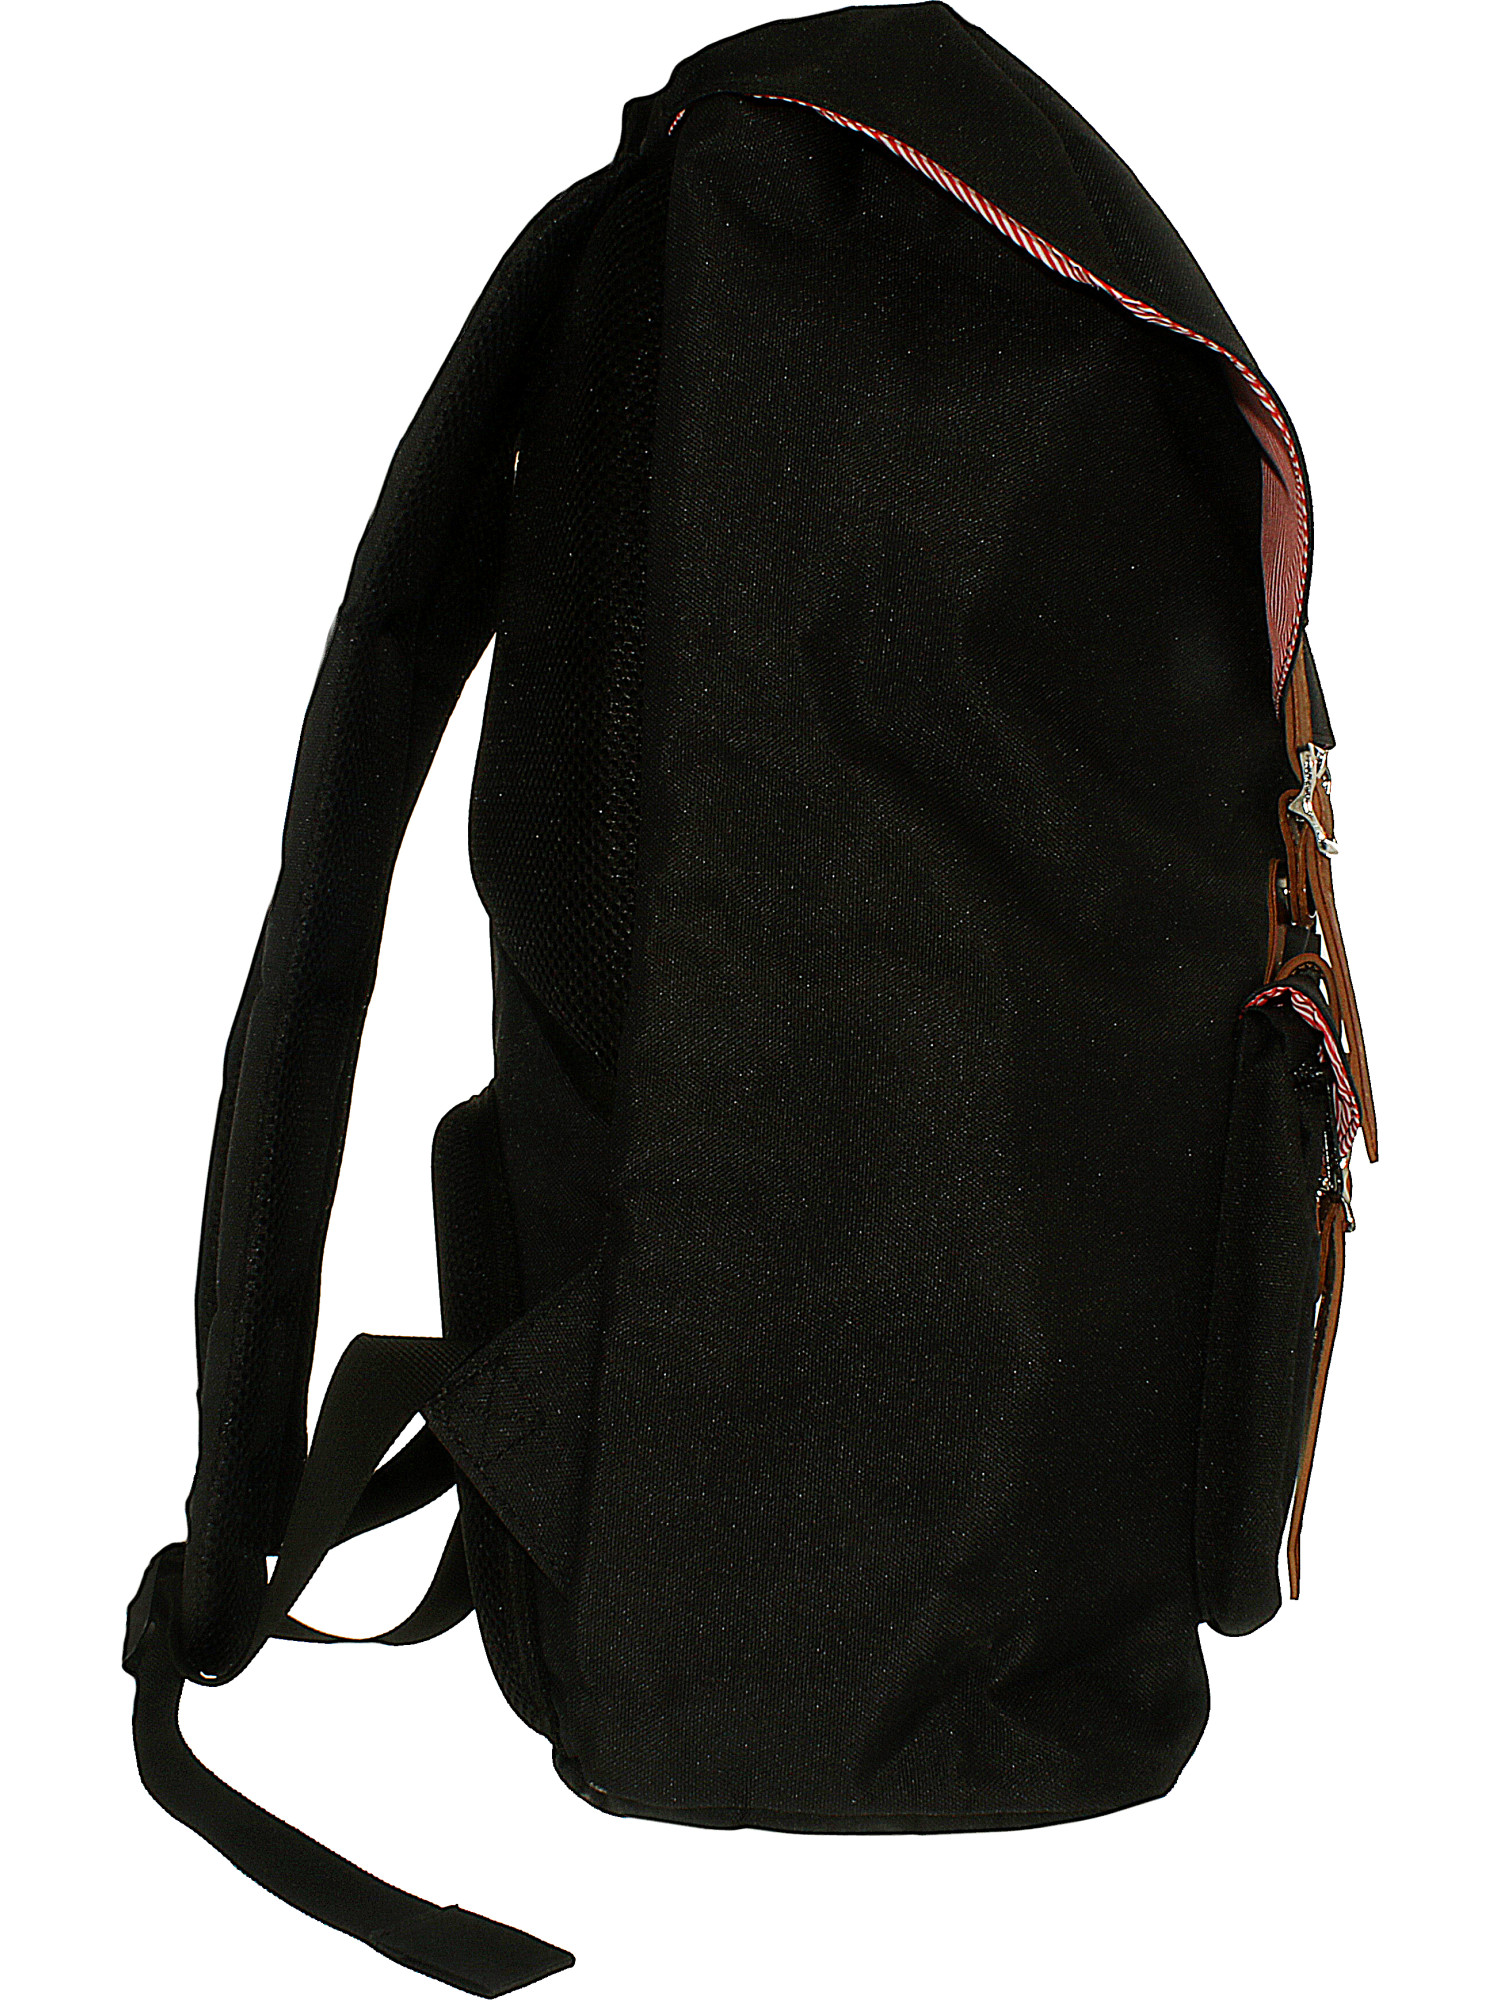 Little America Laptop Backpack - Black - image 2 of 3